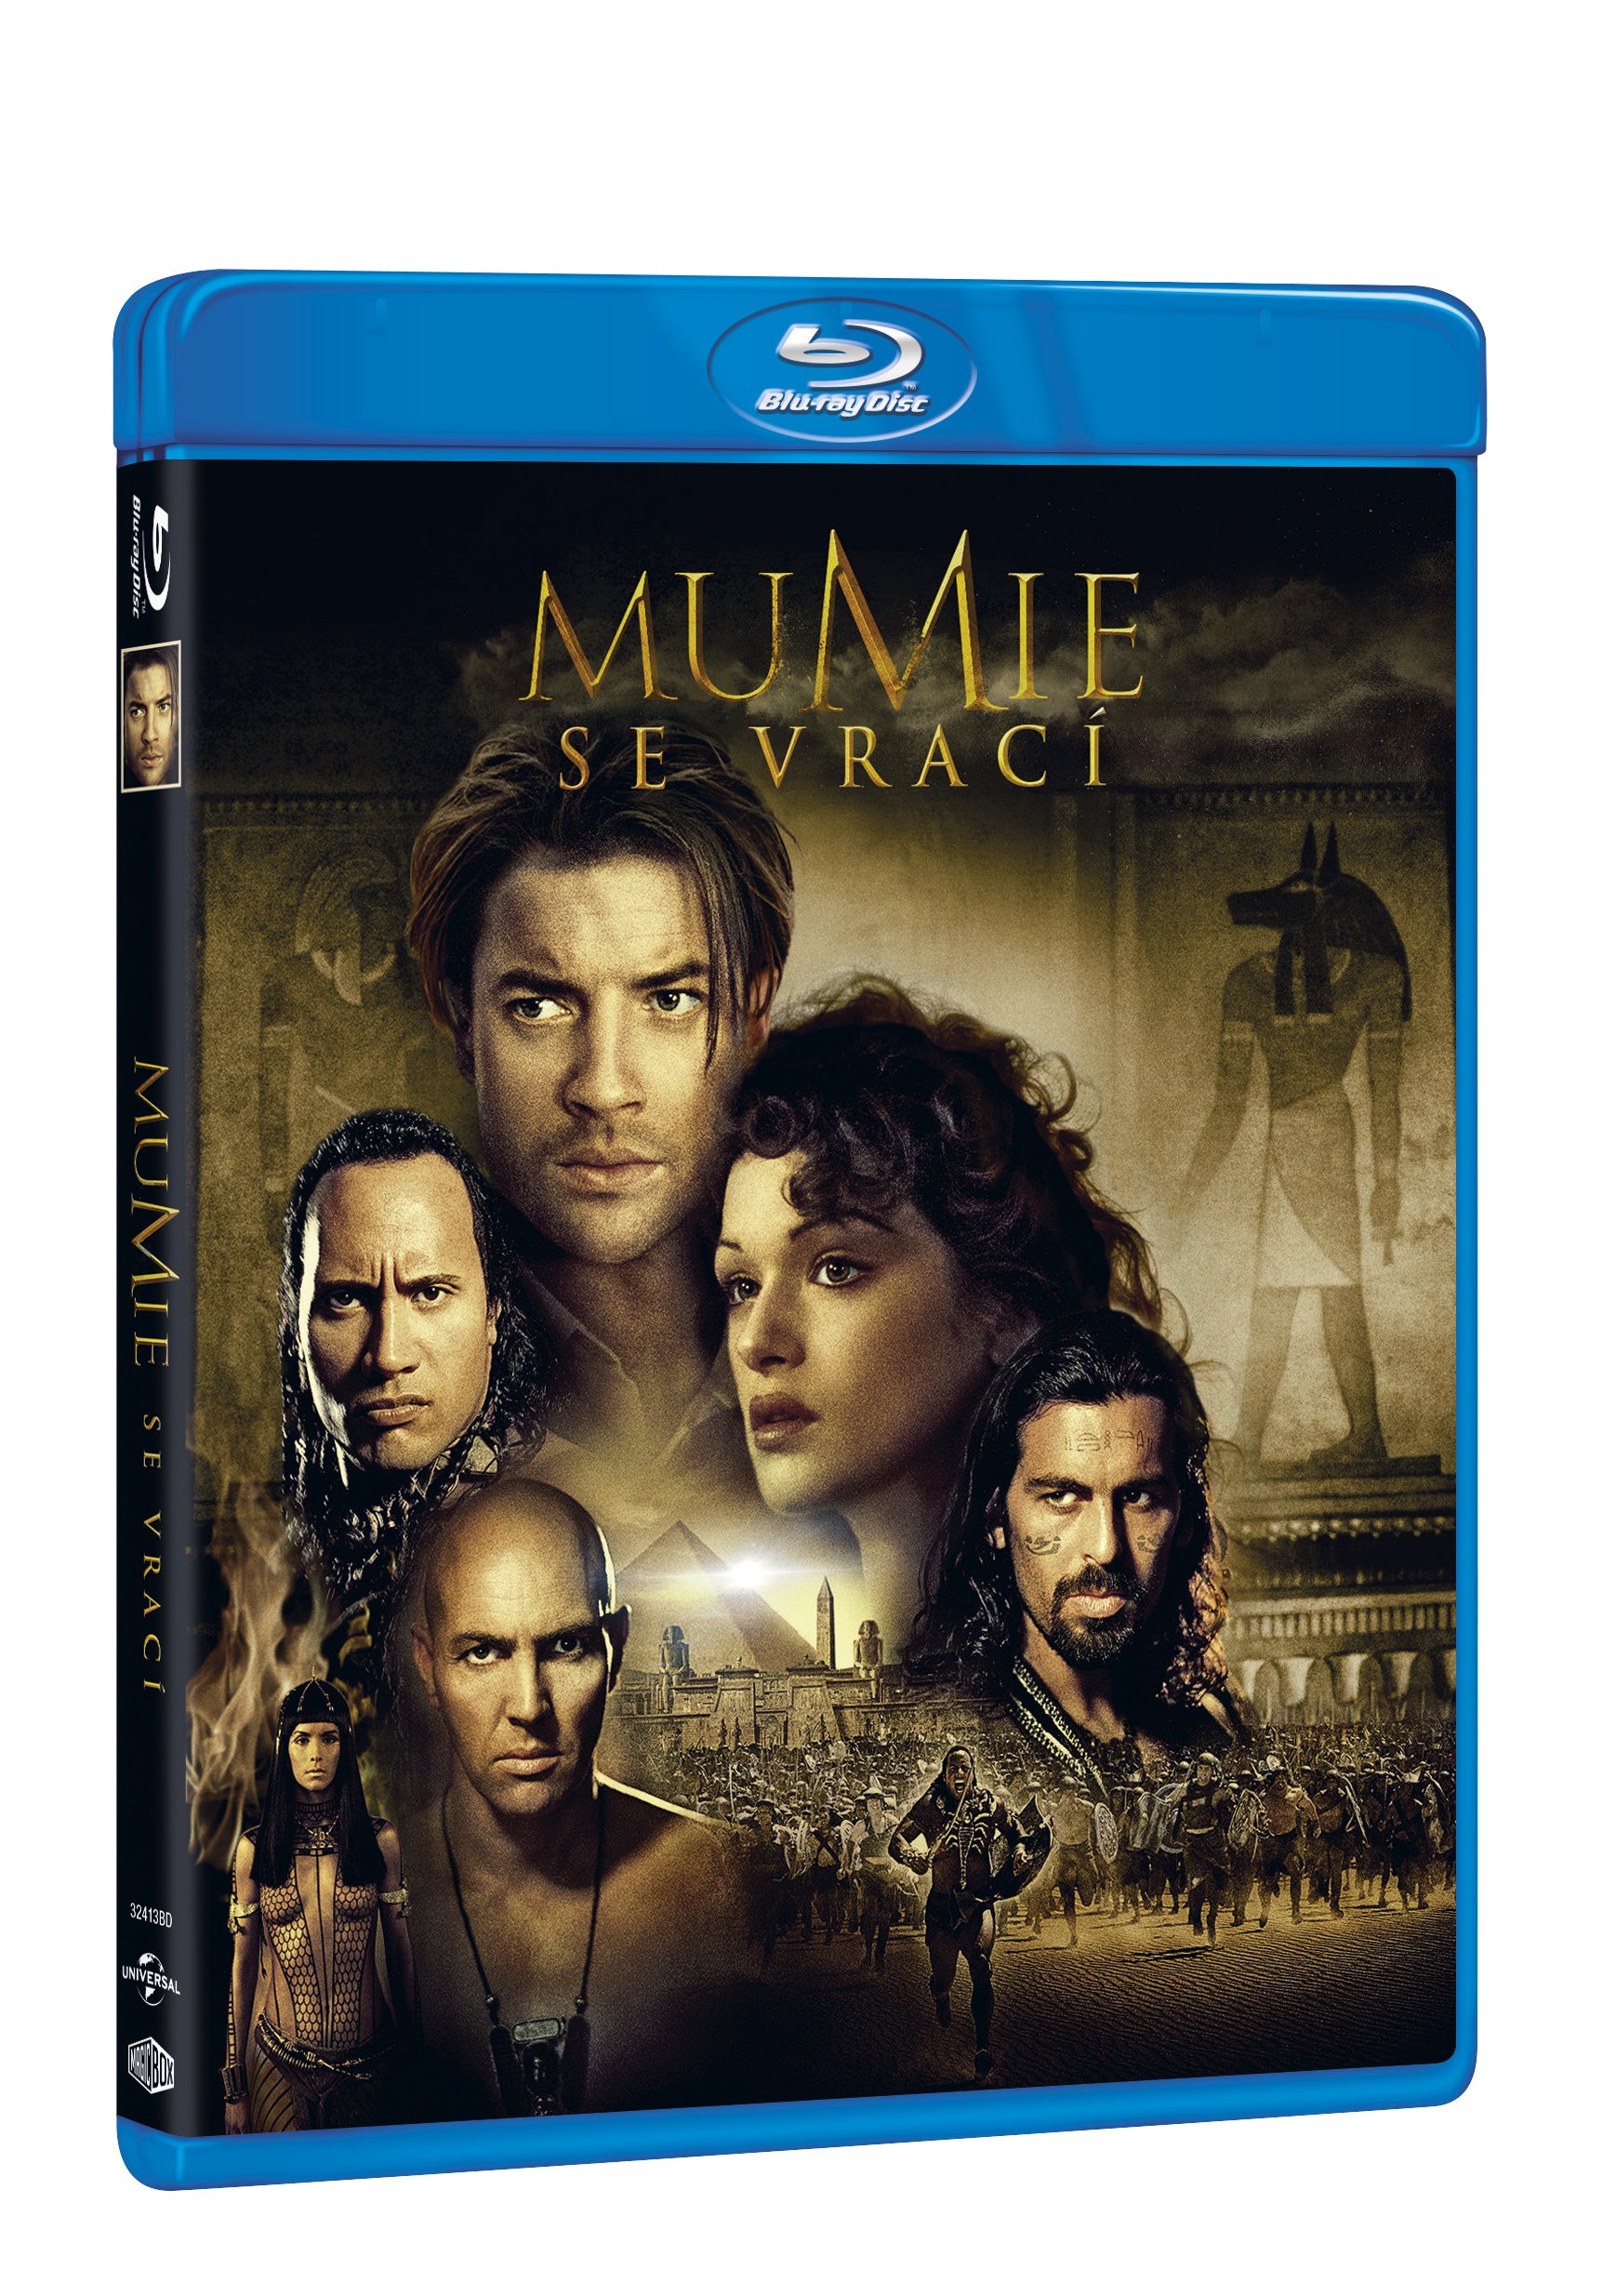 Mumie se vraci BD / The Mummy Returns - Czech version